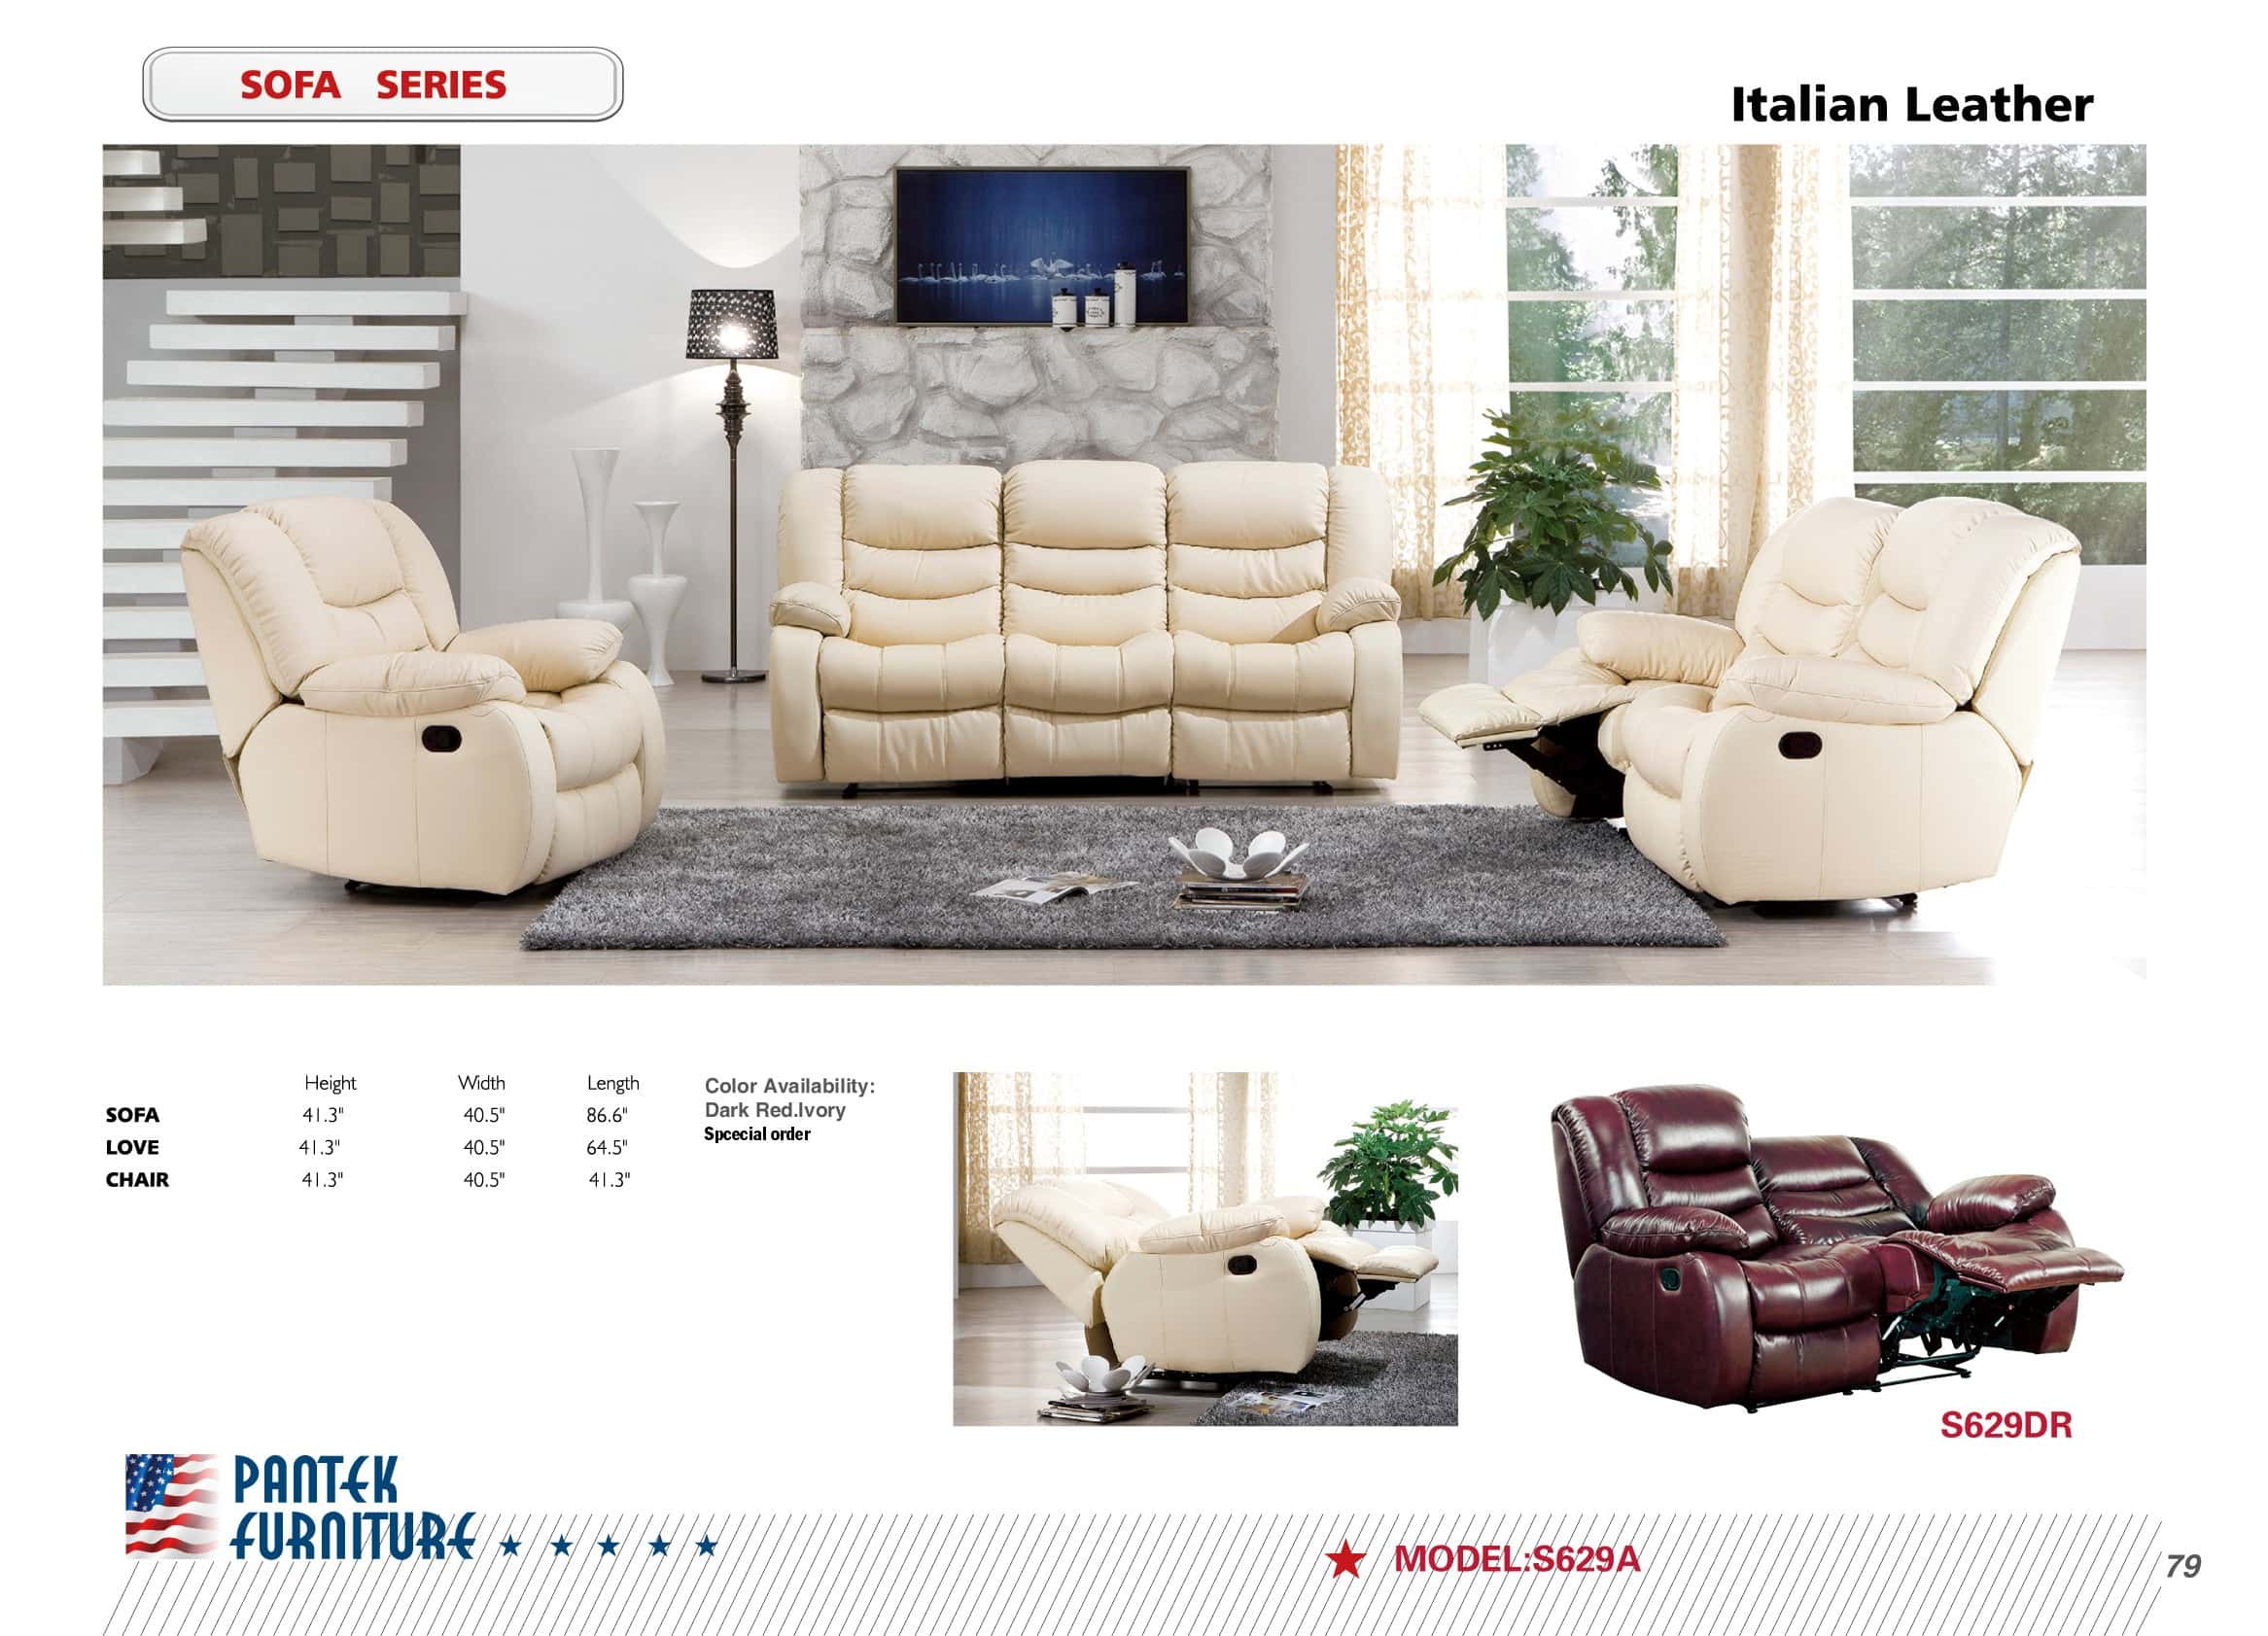 Reactor Vervagen compileren SF 629 Recliner Italian Ivory Leather Sofa, Loveseat & Chair Set by Pantek  Furniture